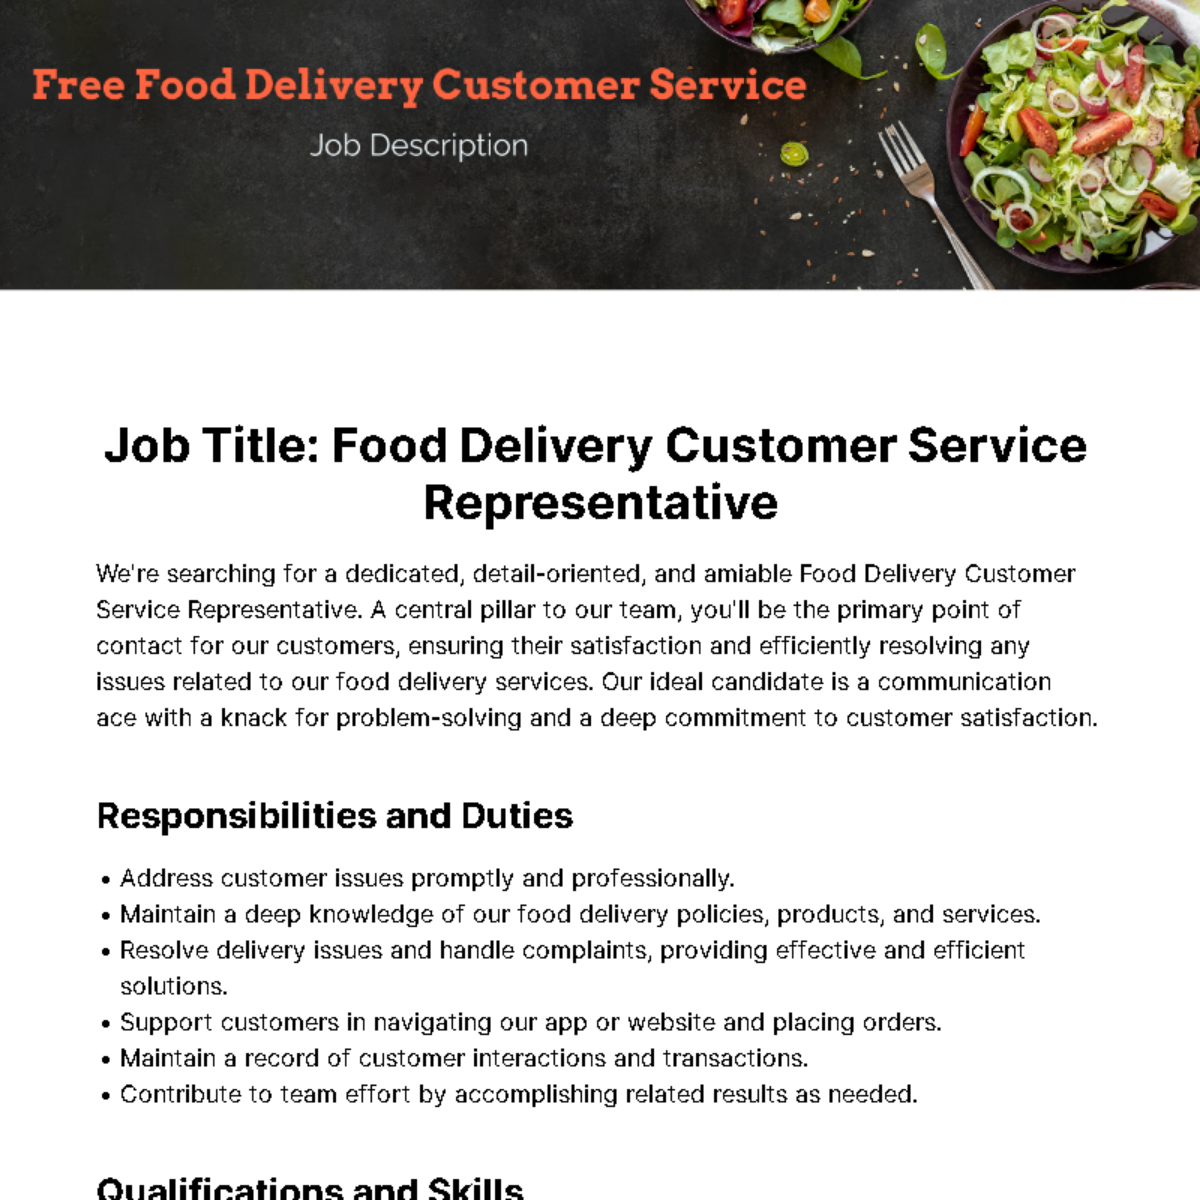 Free Food Delivery Customer Service Job Description Template